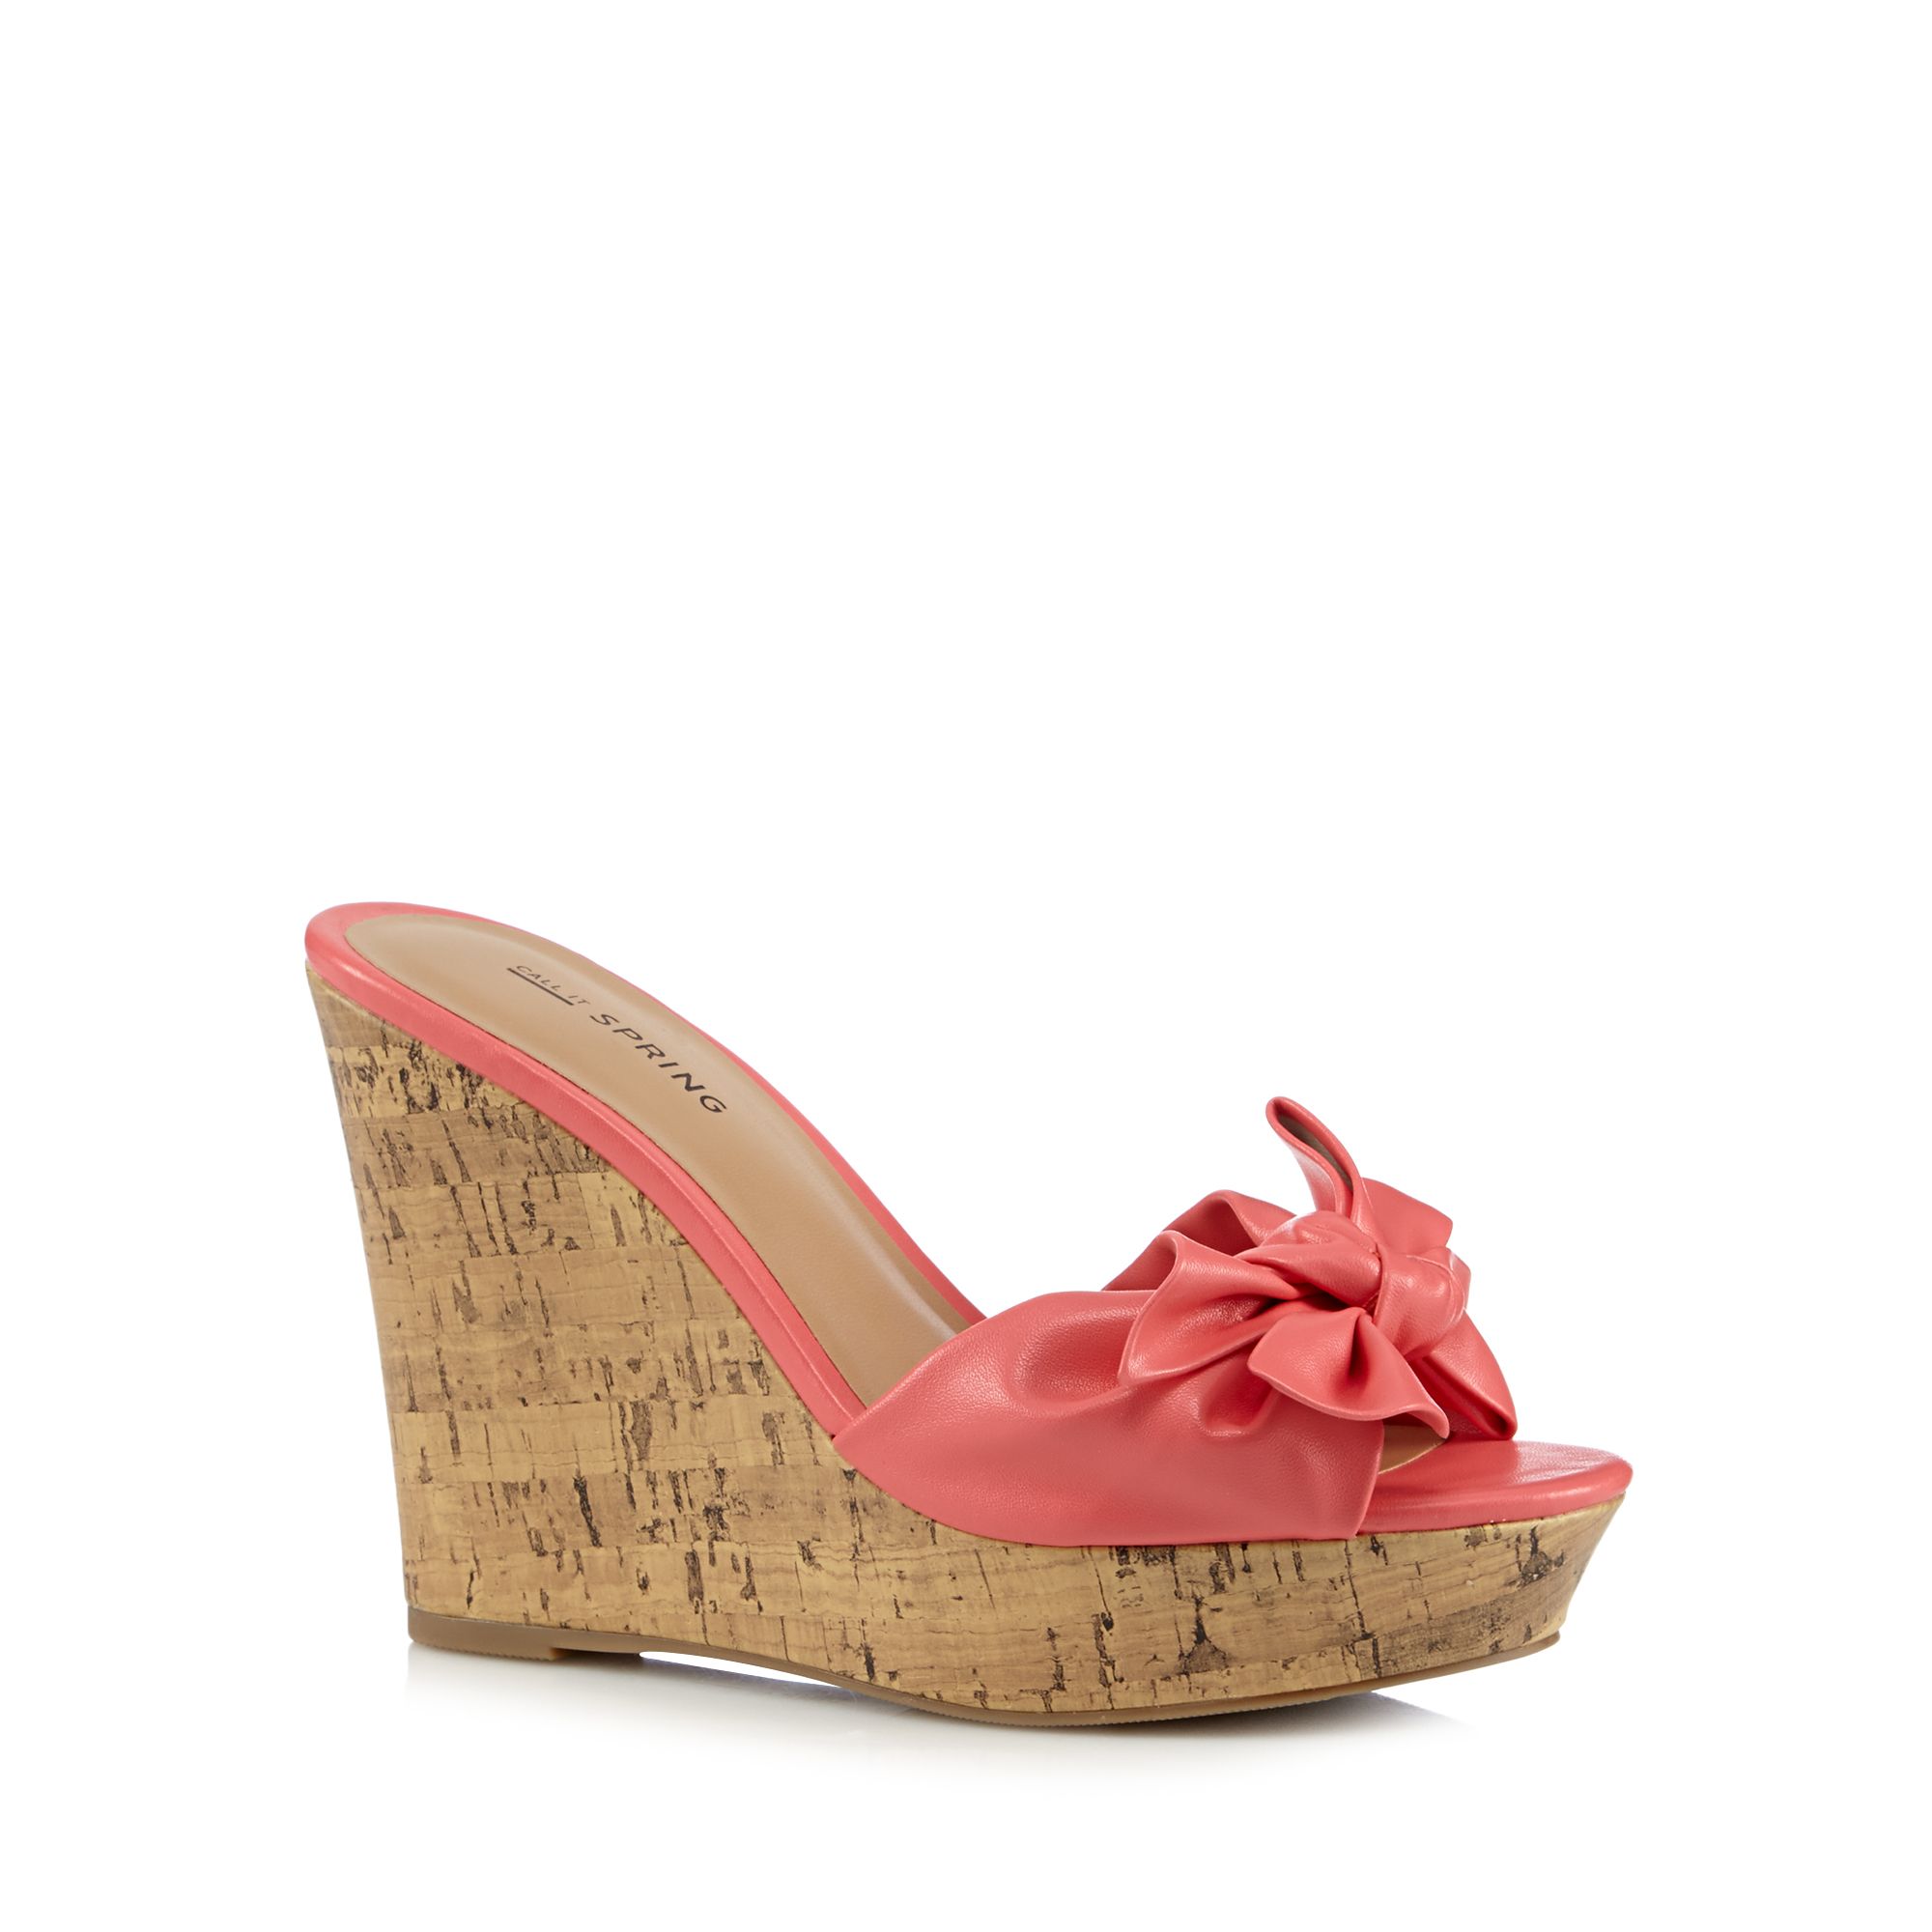 Call It Spring Womens Coral 'Gralivia' Wedge Sandals From Debenhams | eBay